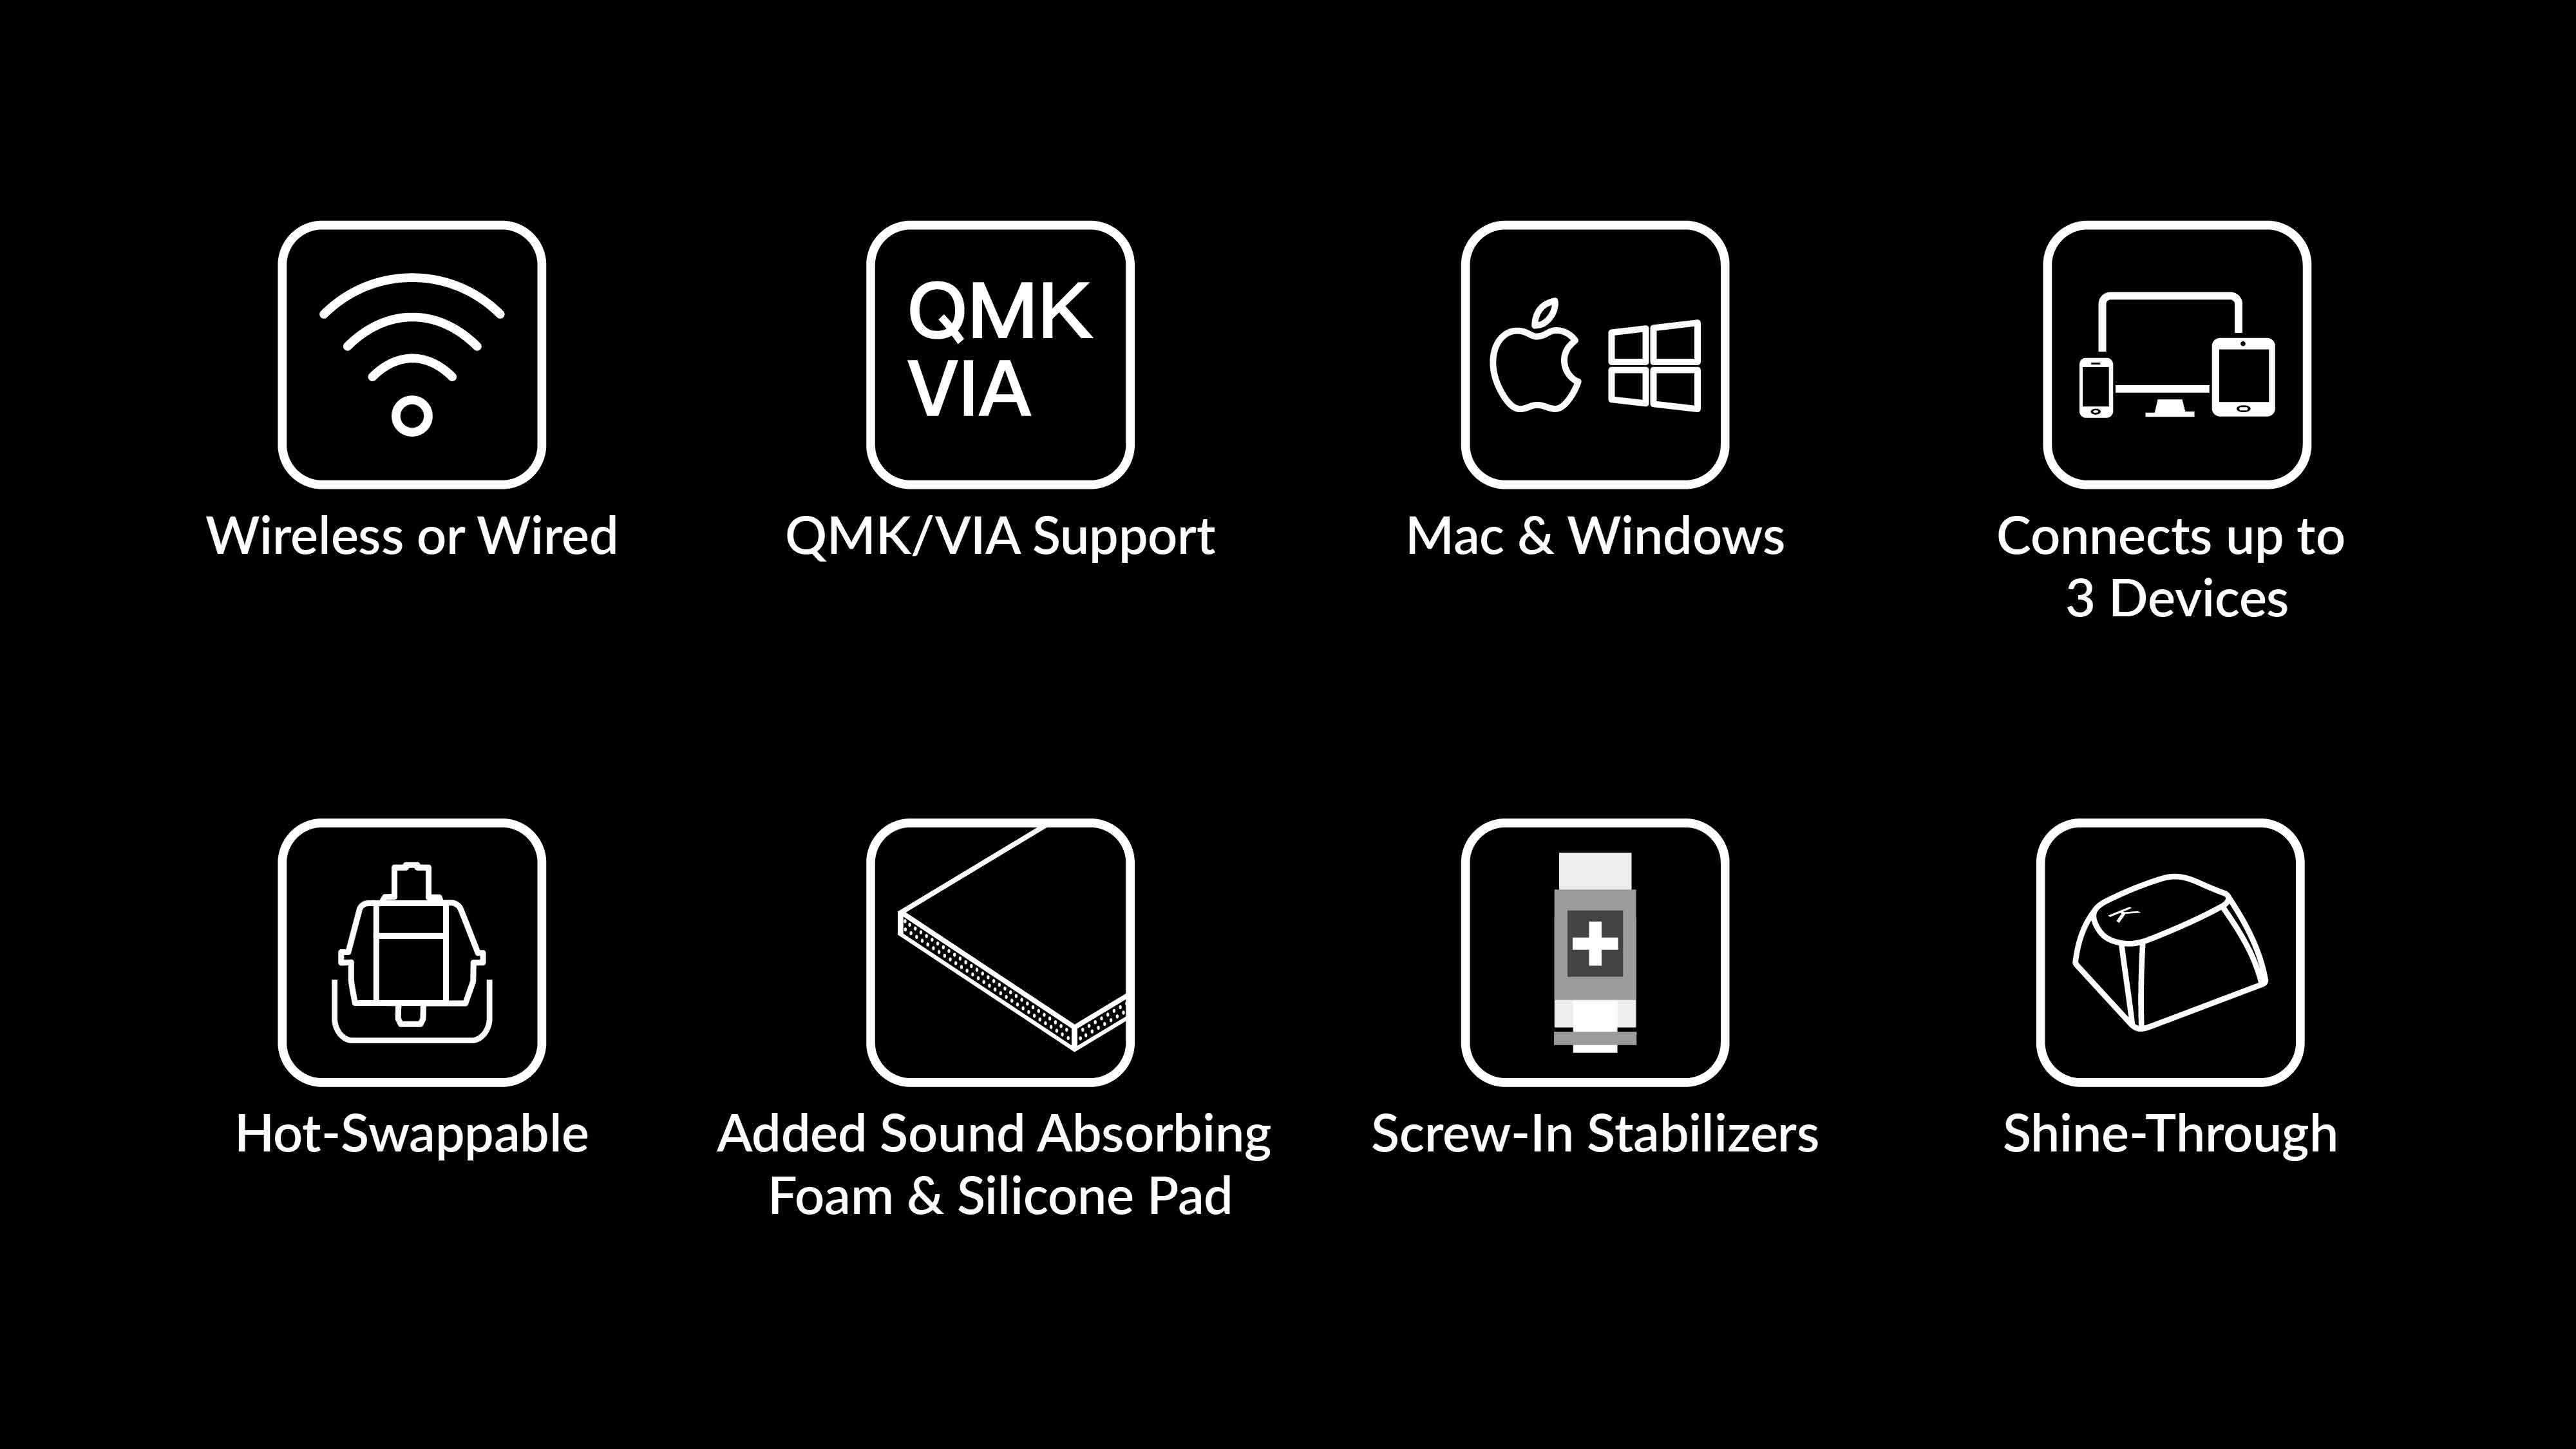 Features of Keychron K2 Pro QMK/VIA Wireless Mechanical Keyboard - ISO Layout